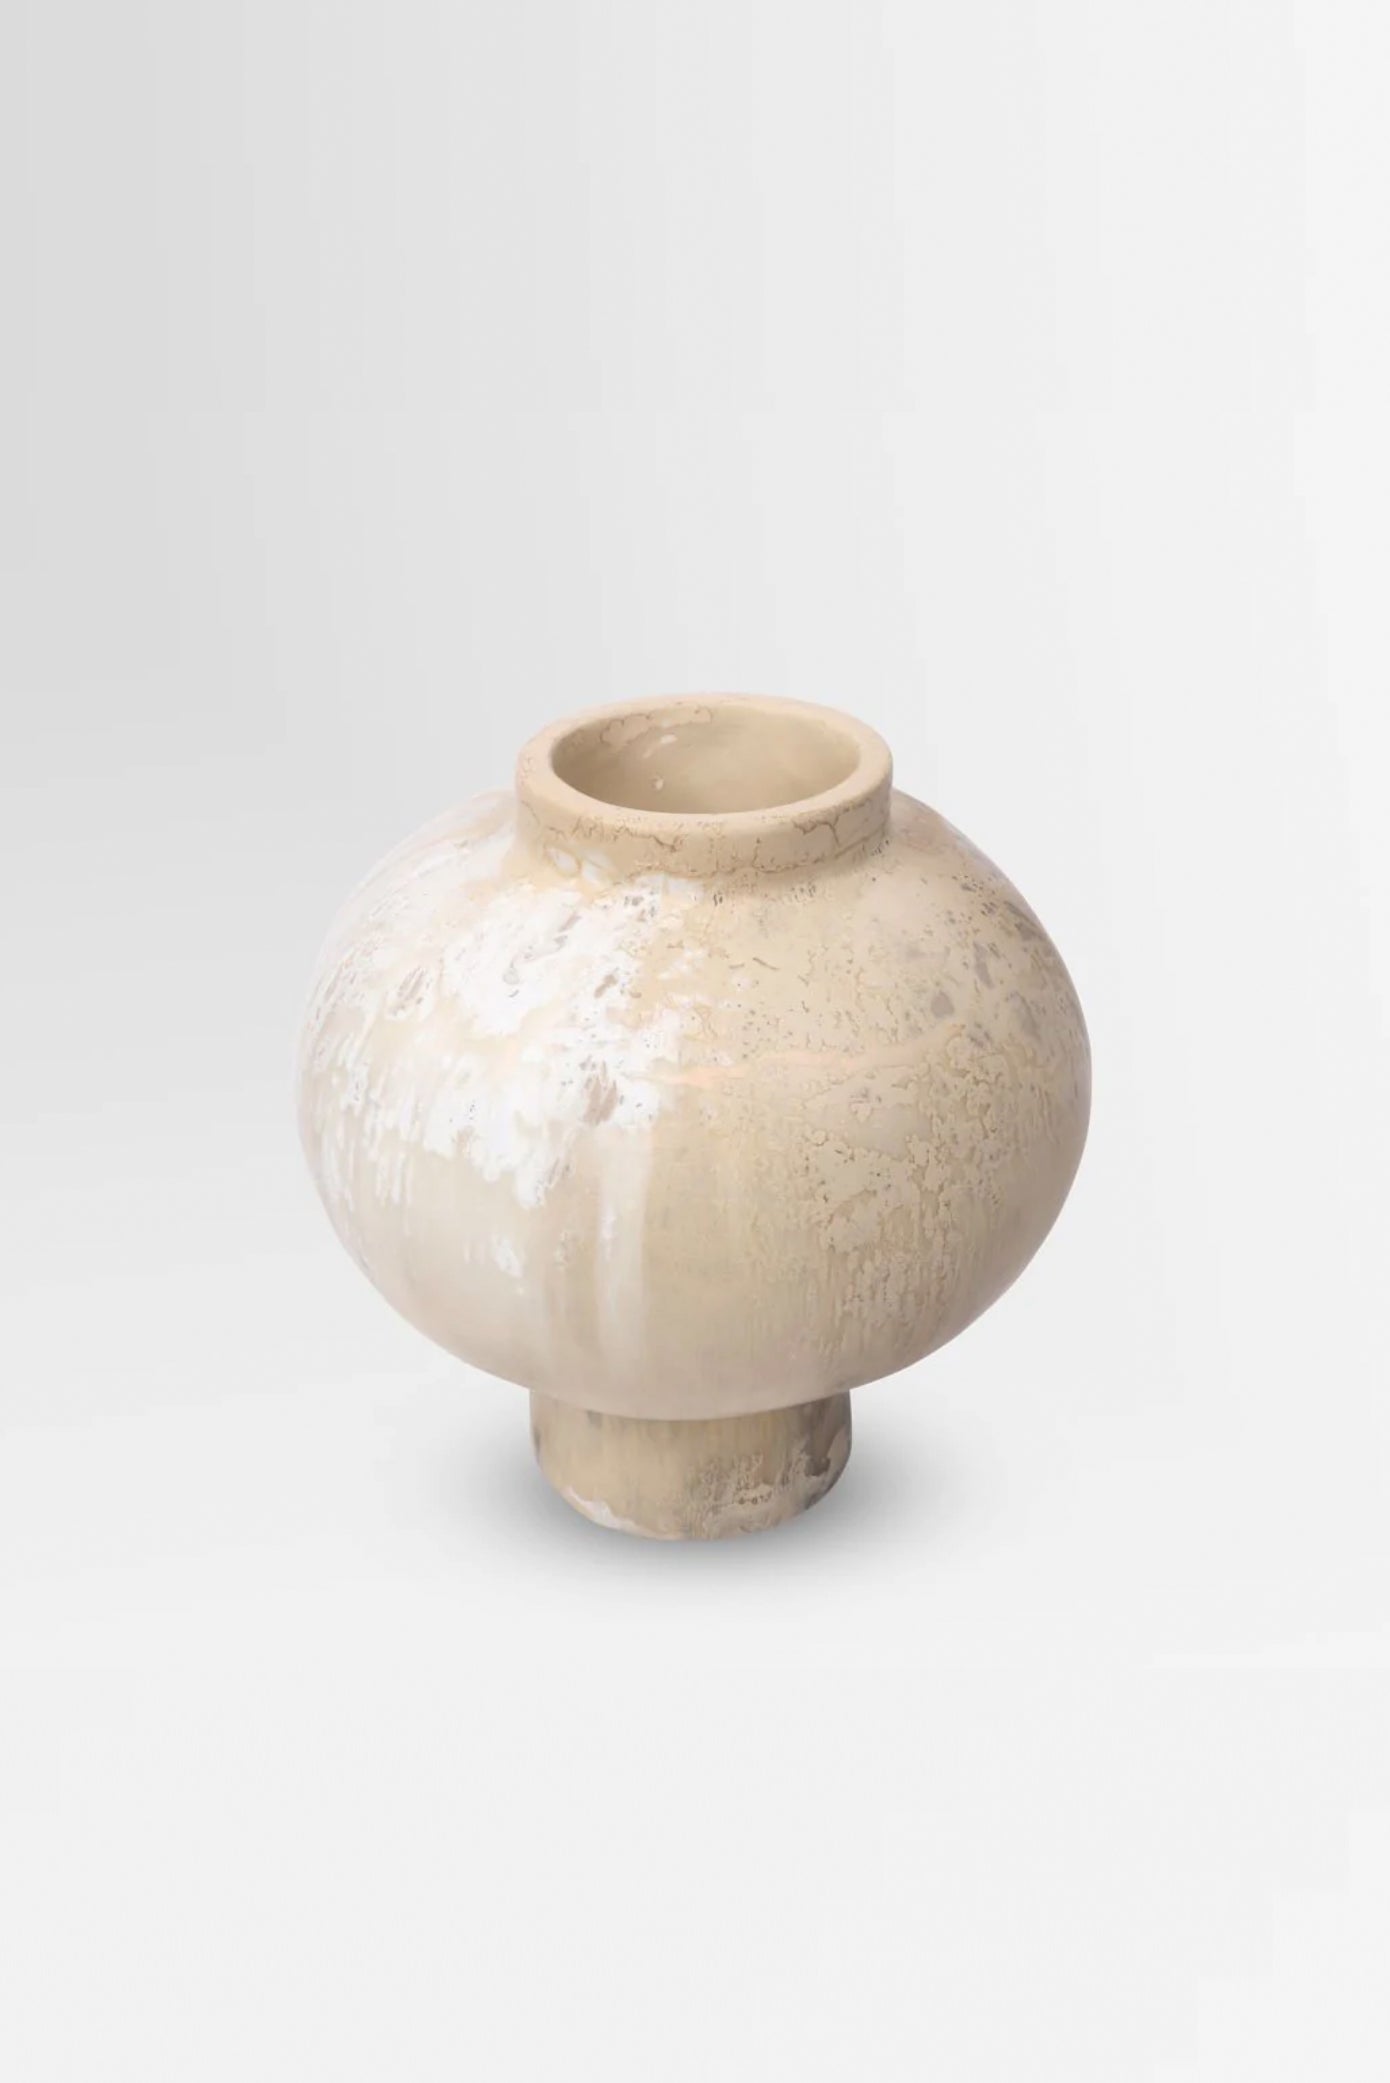 Resin Bold Pearl Vase in Sandy Pearl. Image by Dinosaur Designs